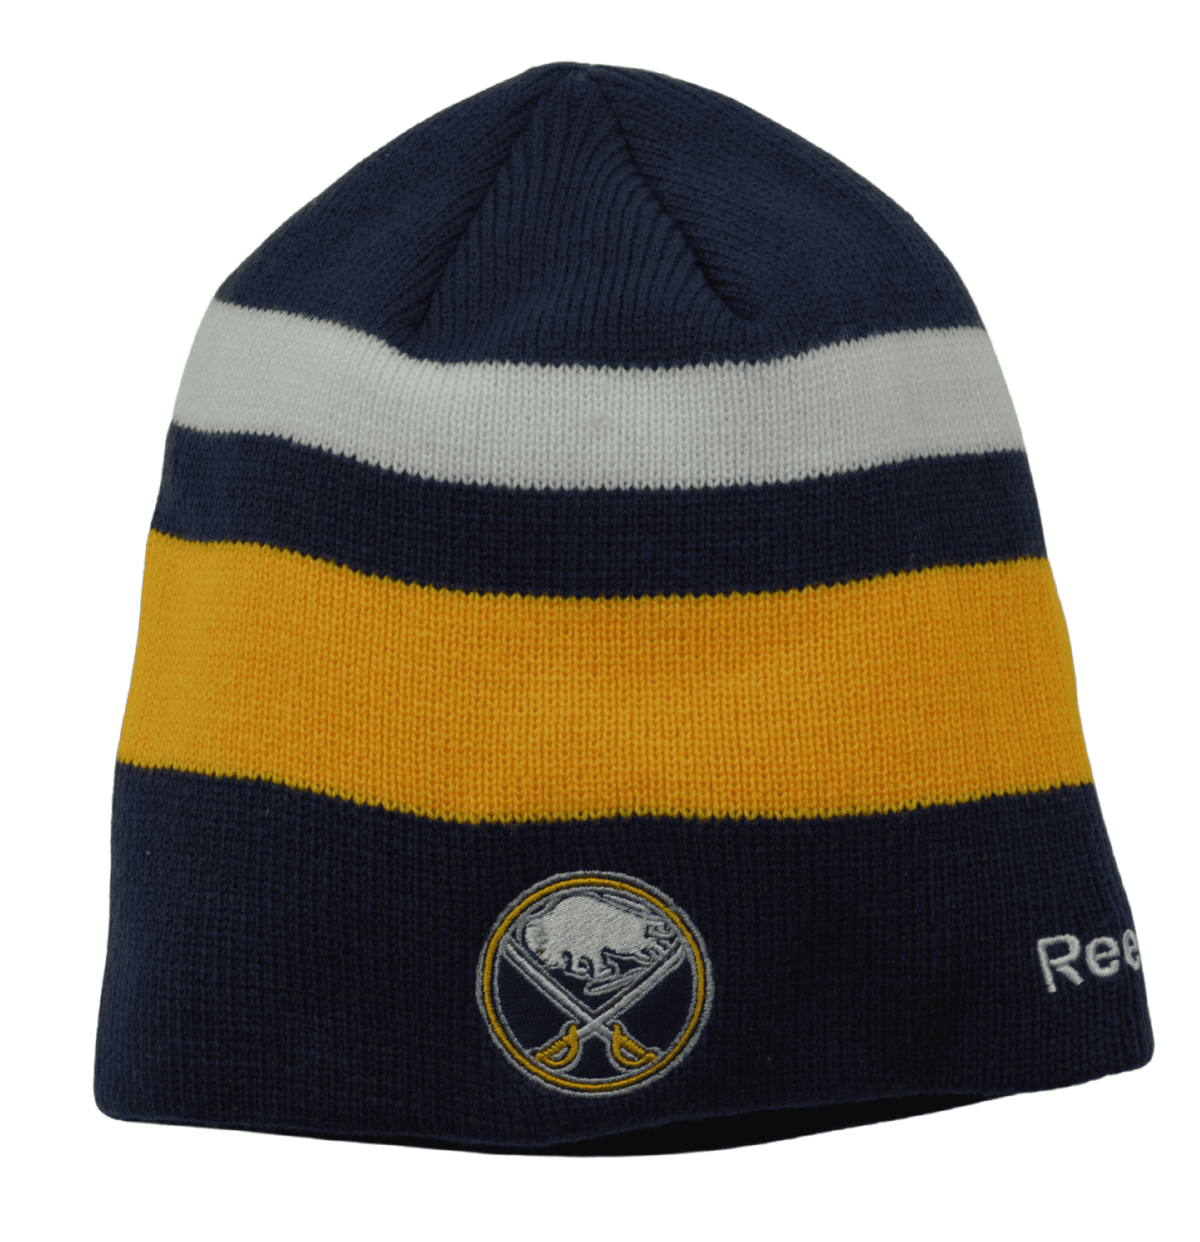 Buffalo Sabres Rebook Center Ice Striped Knit NHL Hockey Beanie Winter Hat